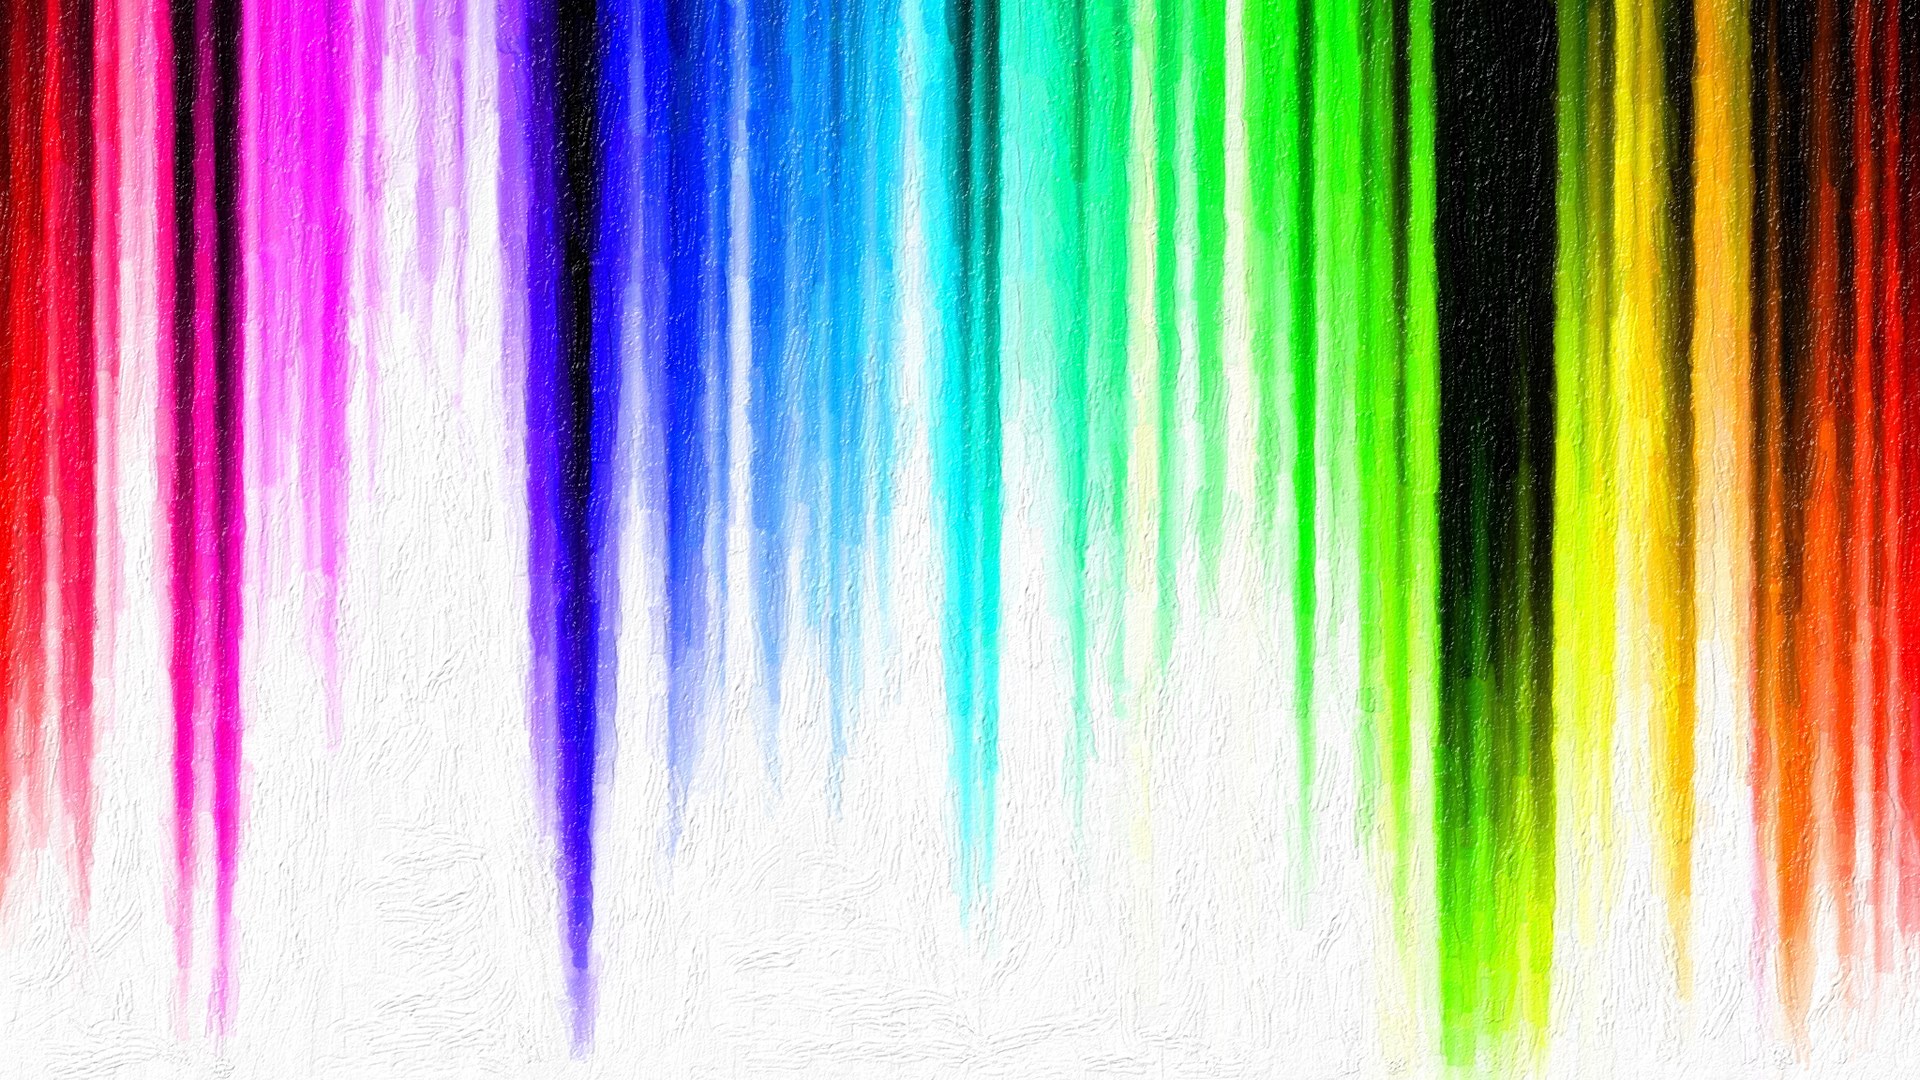 1920x1080 rainbow screensavers and background free JPG 652 kB Gallery HD Wallpaper